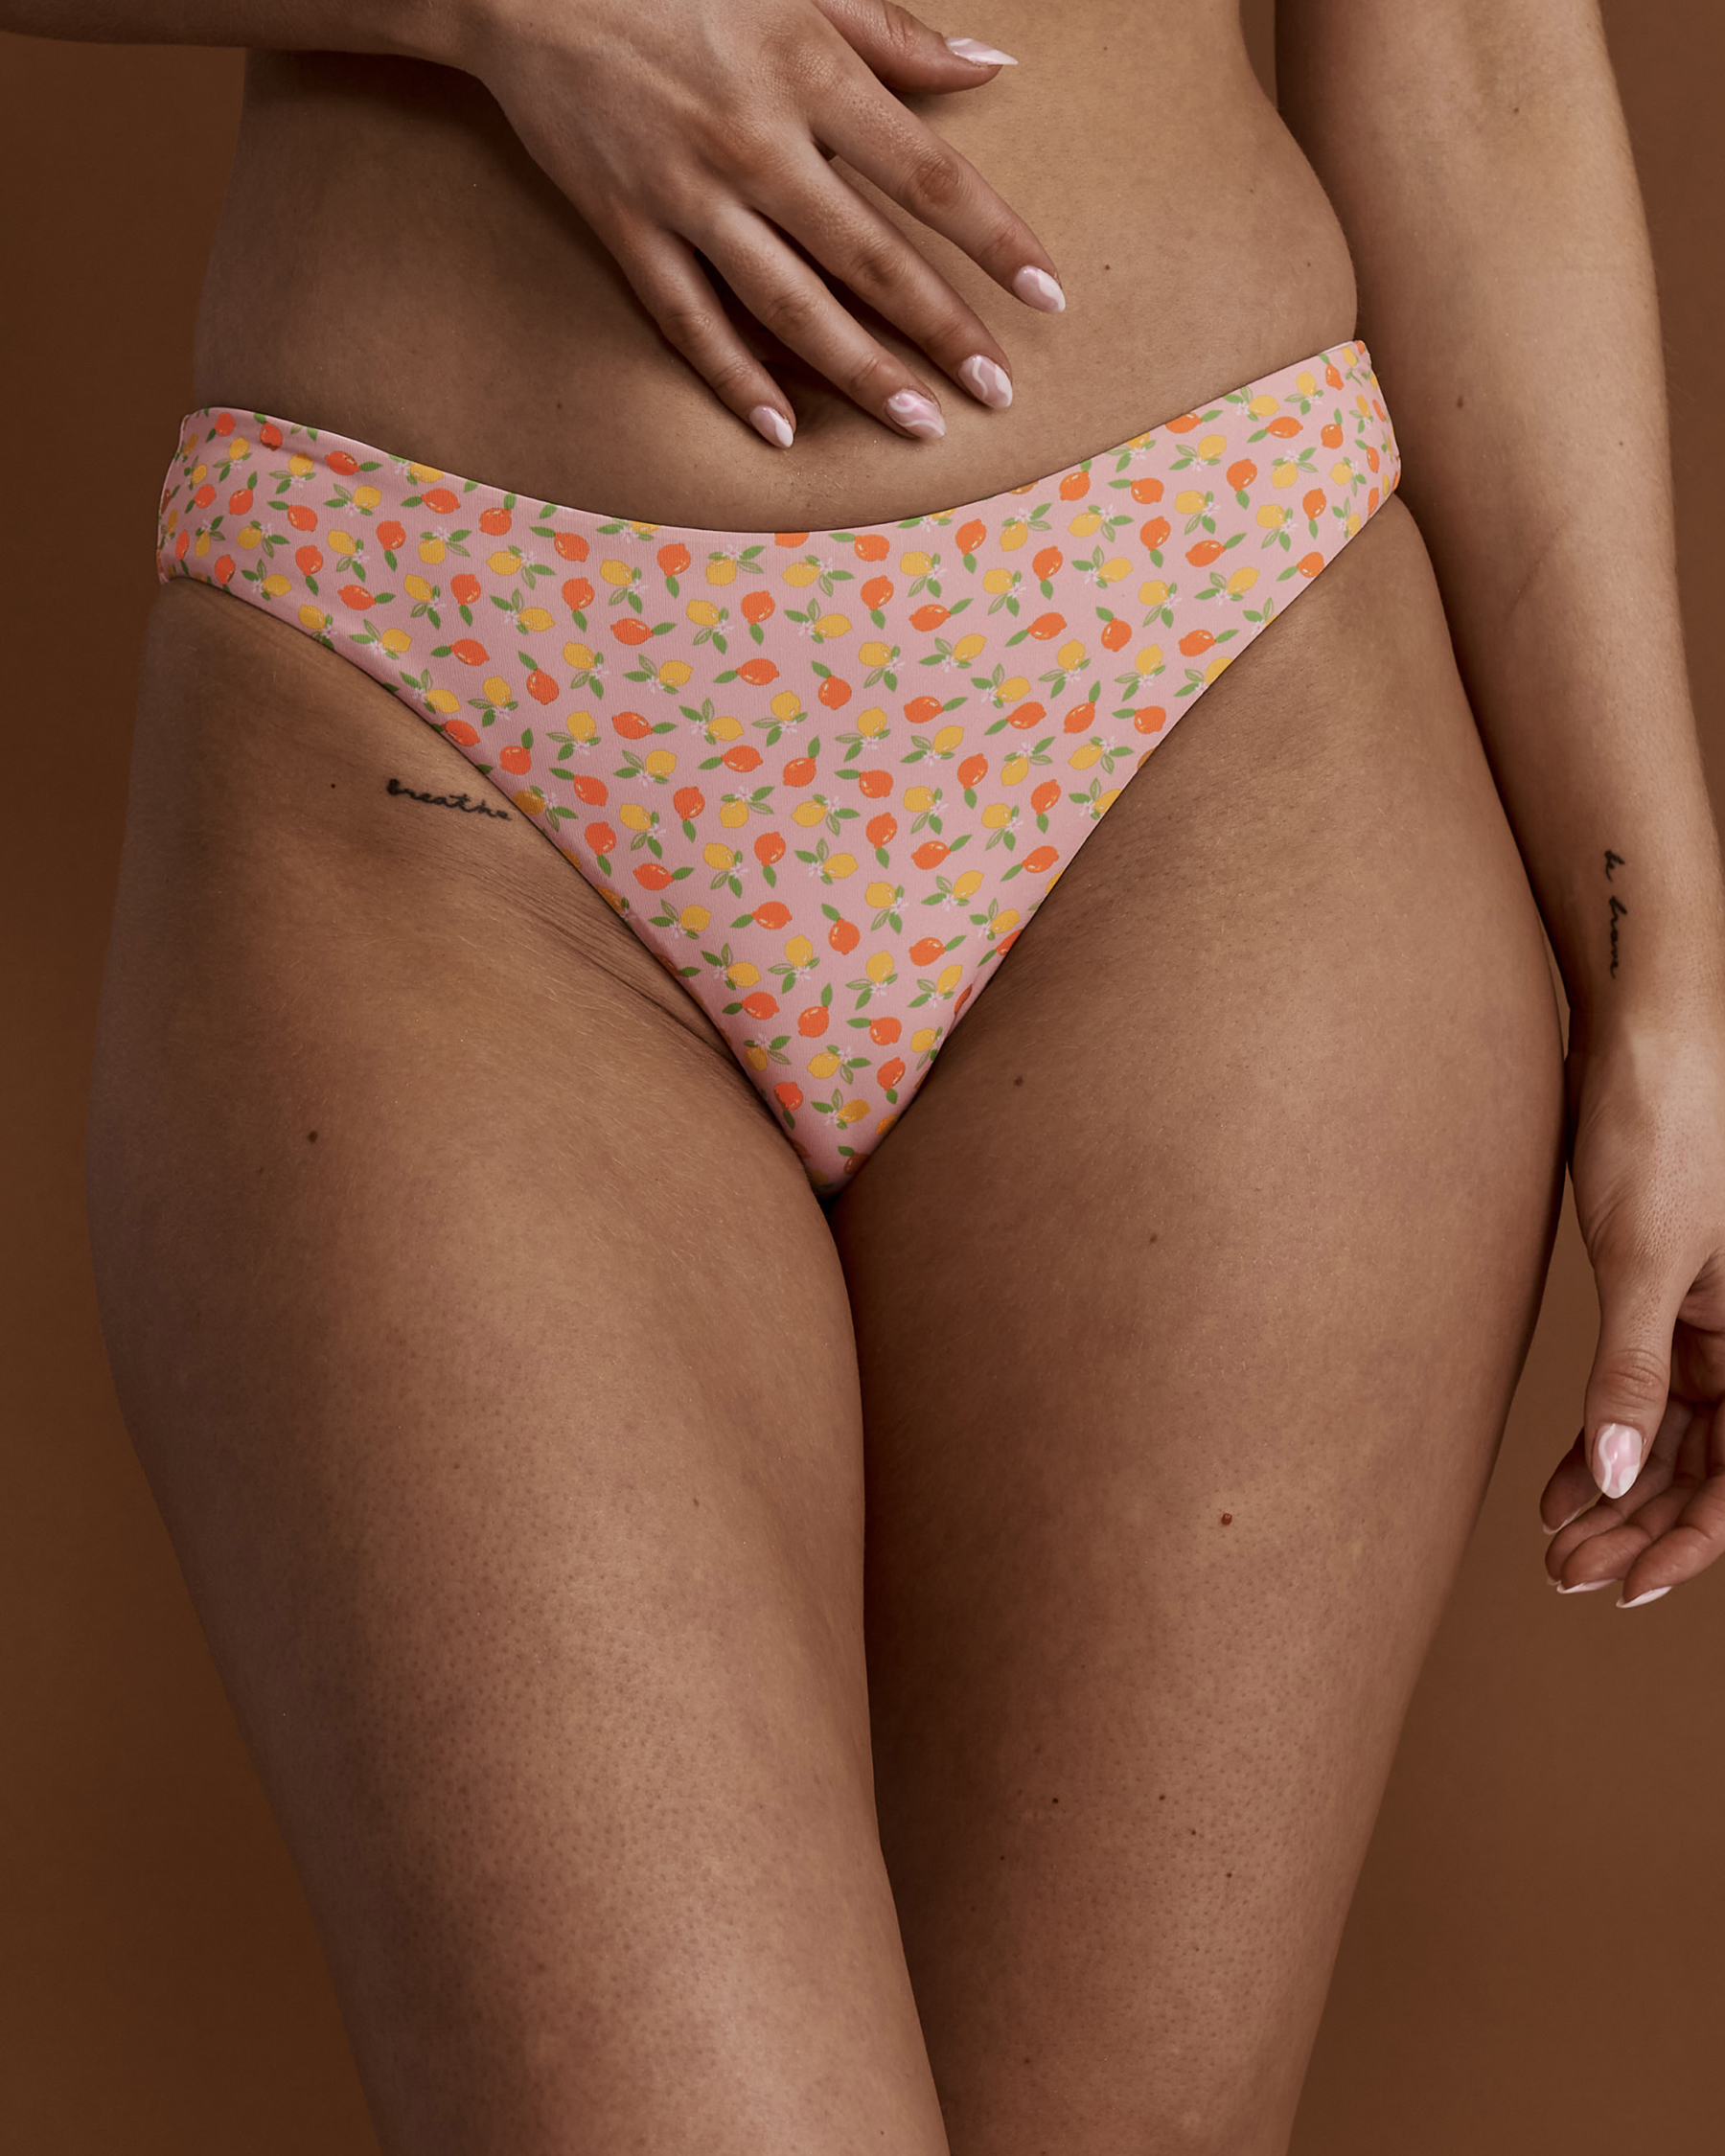 DIPPIN'DAISY'S Bas de bikini jambe haute Nocturnal SPRING IT ON Imprimé miniature D3032 - Voir1